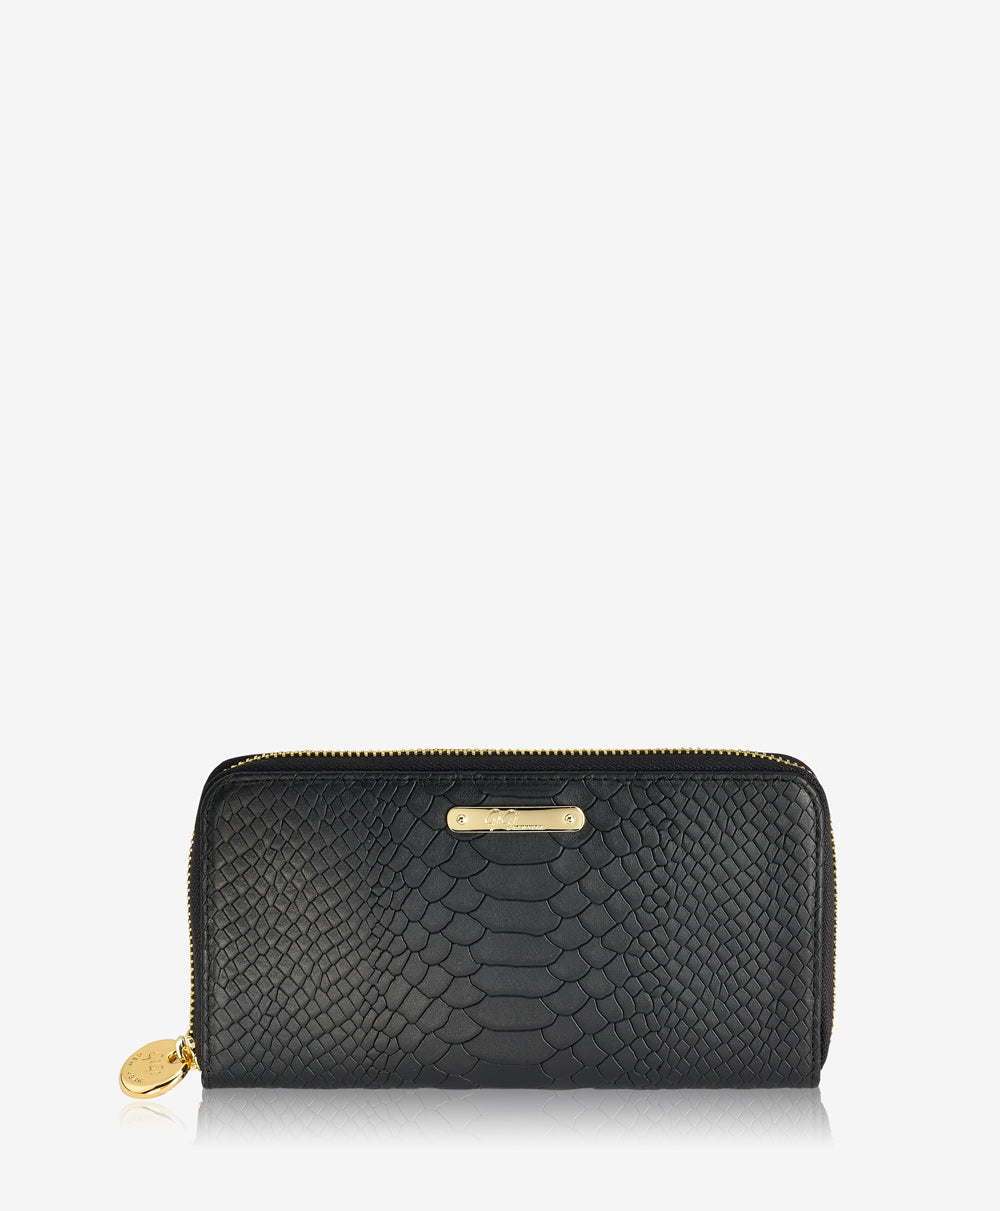 GiGi New York Large Zip Around Wallet Black Embossed Python Leather